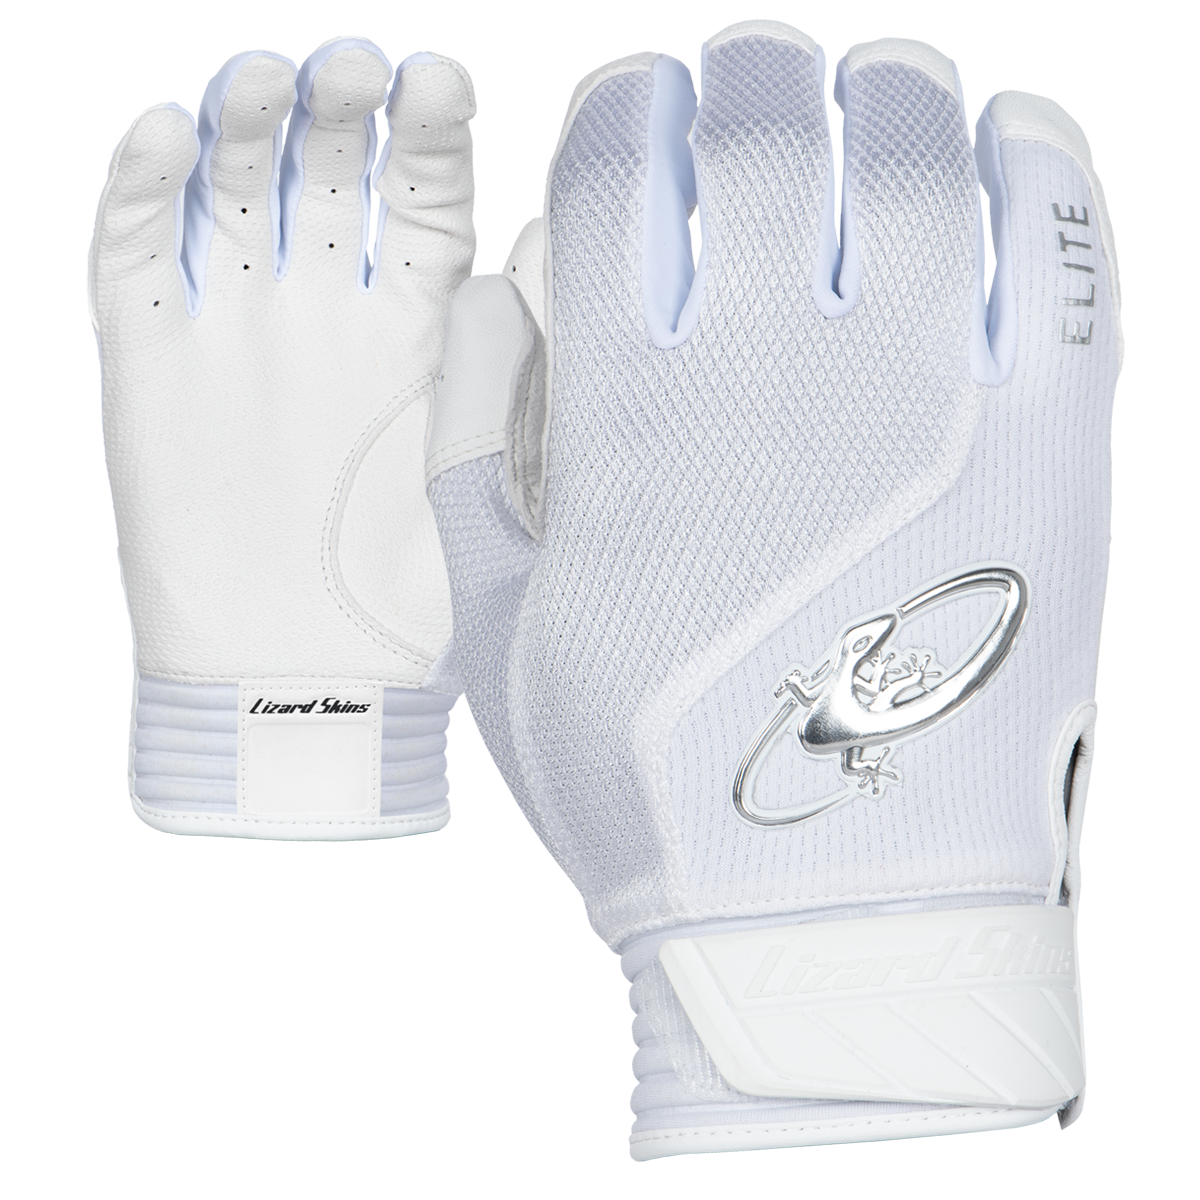 Komodo Elite V2 Batting Glove - Diamond White